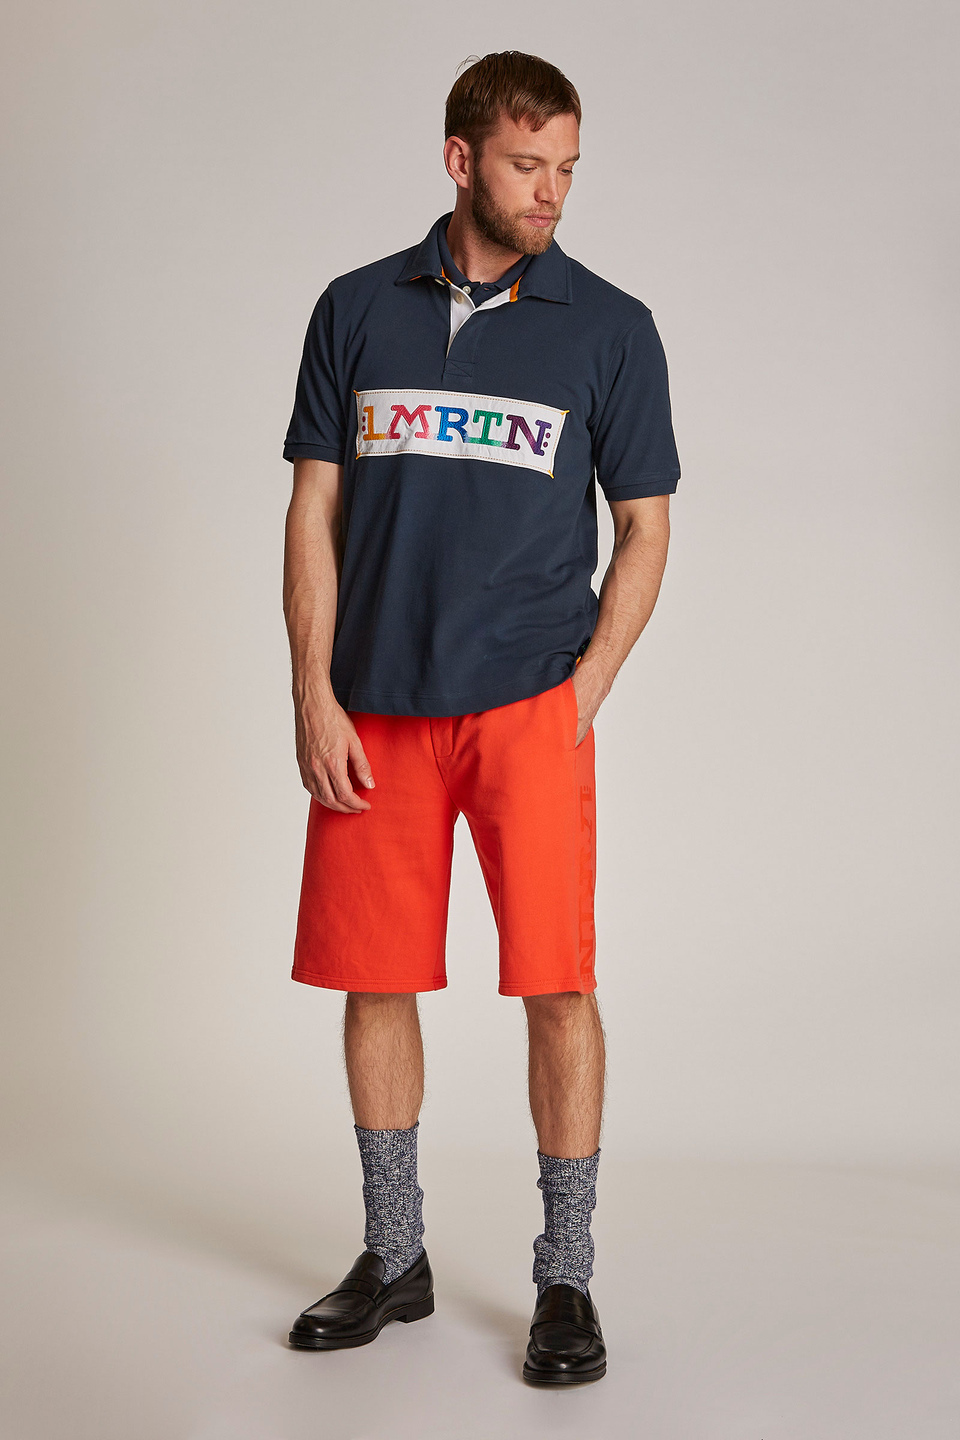 Herren-Poloshirt mit kurzem Arm, oversized Modell - La Martina - Official Online Shop